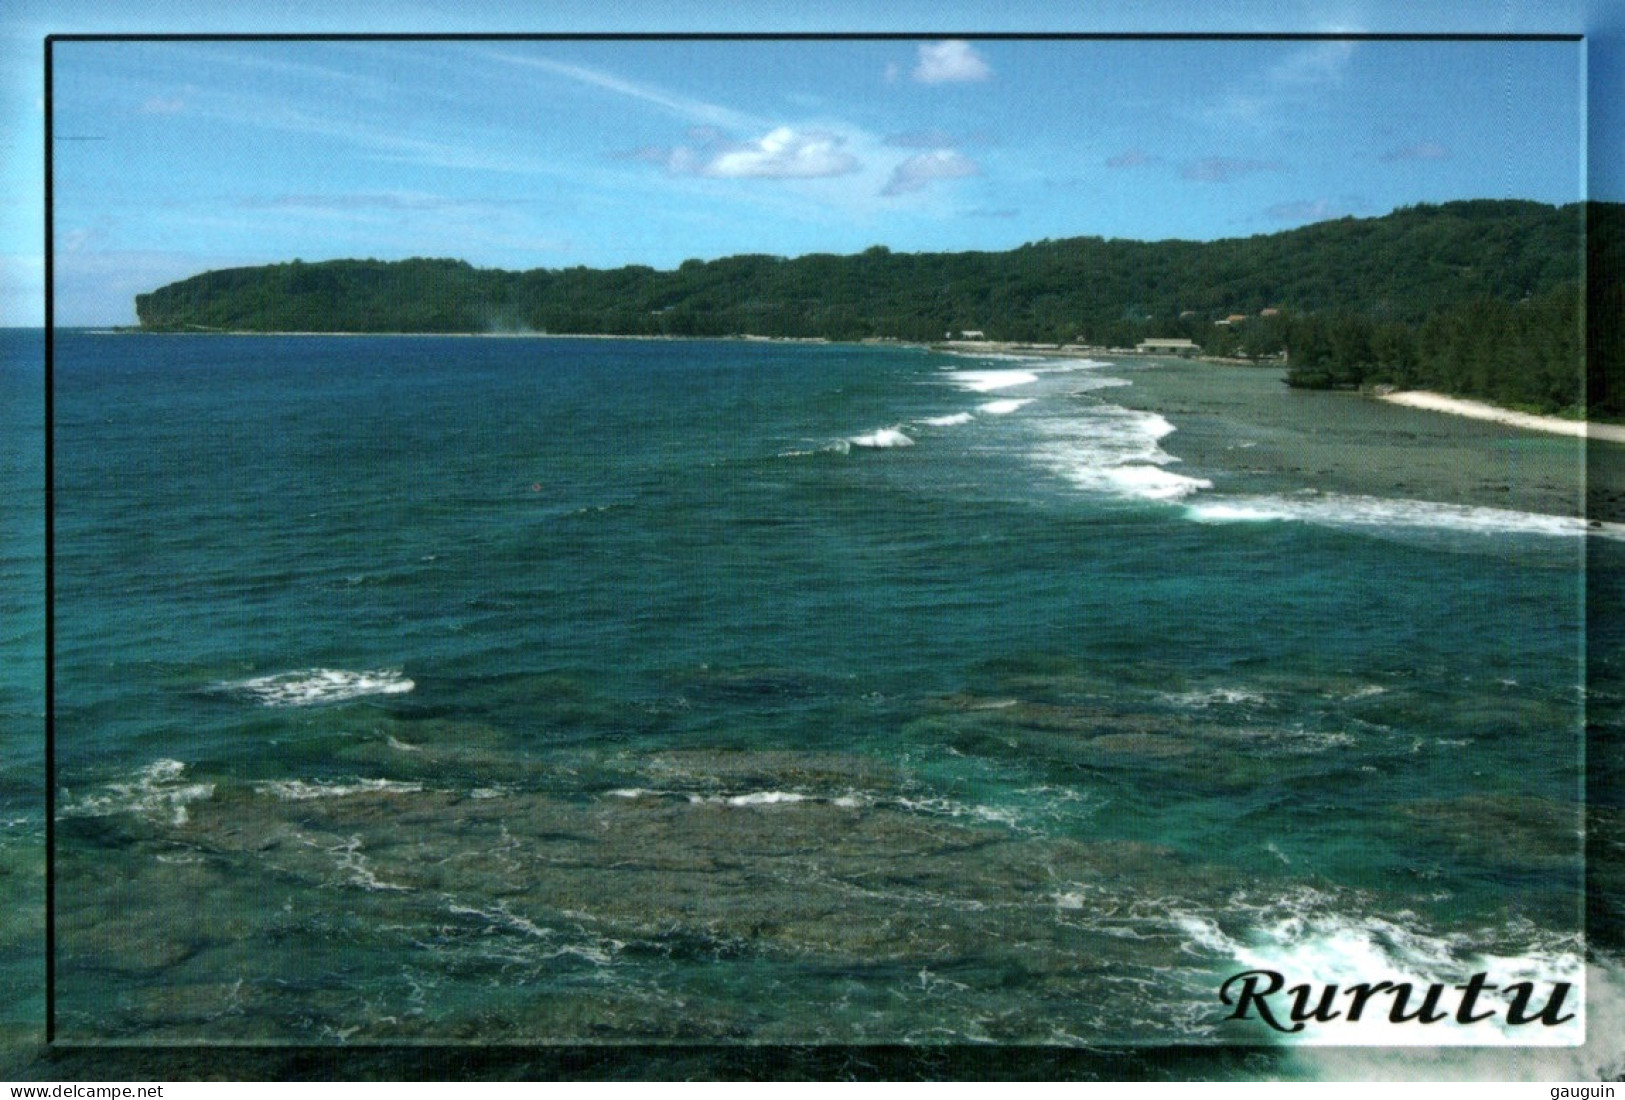 CPM - RURUTU - Baie De MOERAI - Photo RC.Wymann - Edition STP Multipress - Polinesia Francesa